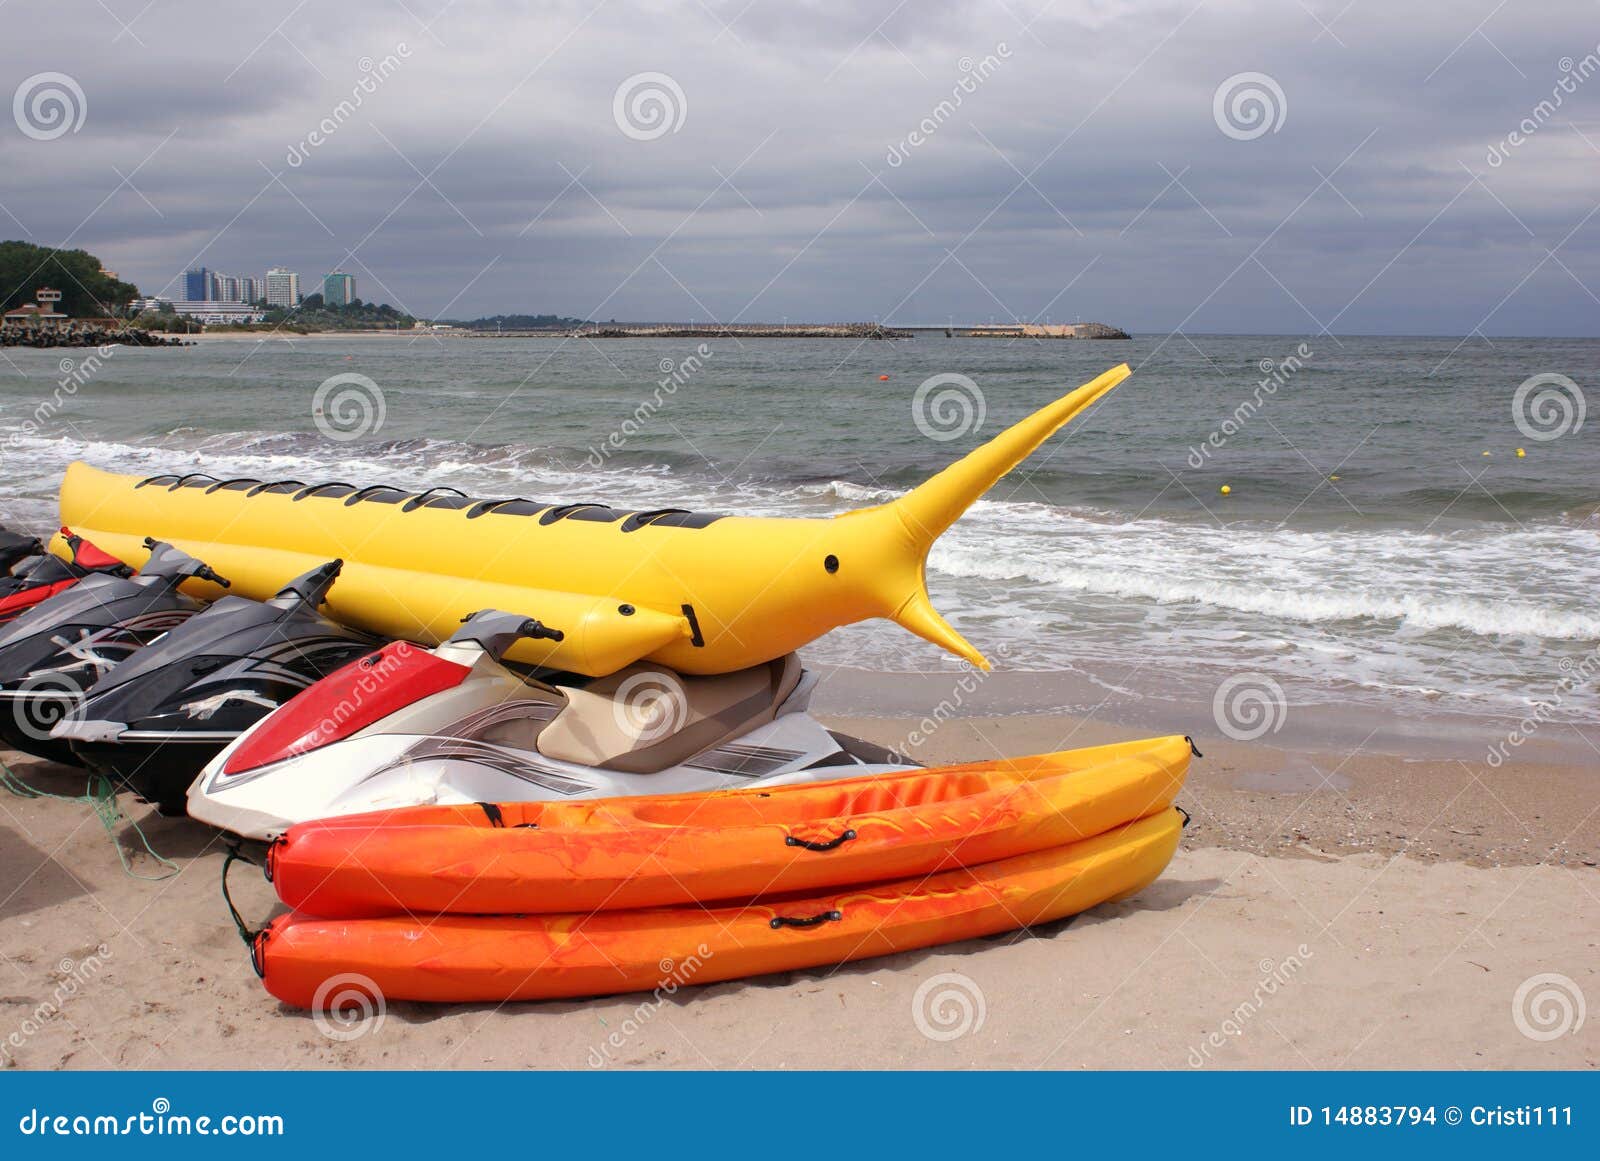 Nautical sports on beach stock photo. Image of banana - 14883794